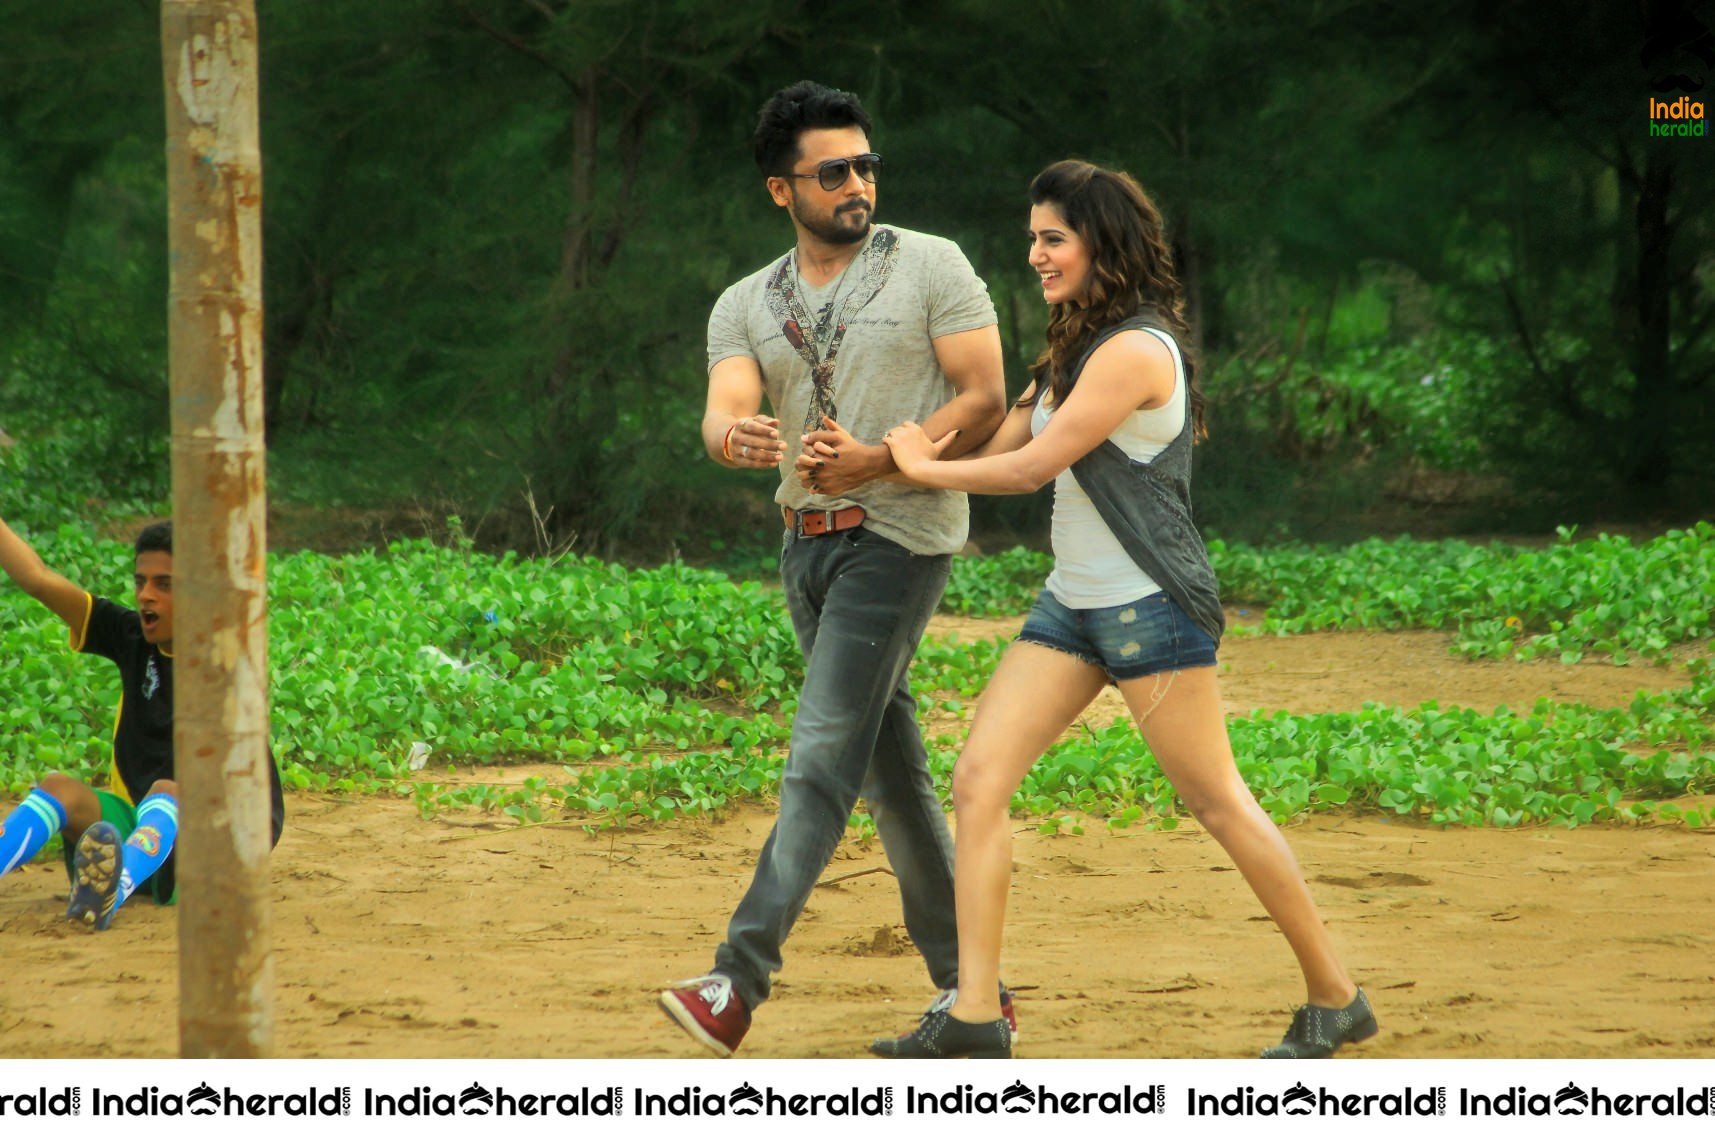 INDIA HERALD EXCLUSIVE Hot Samantha and Surya Unseen Stills from Sikindar Set 1